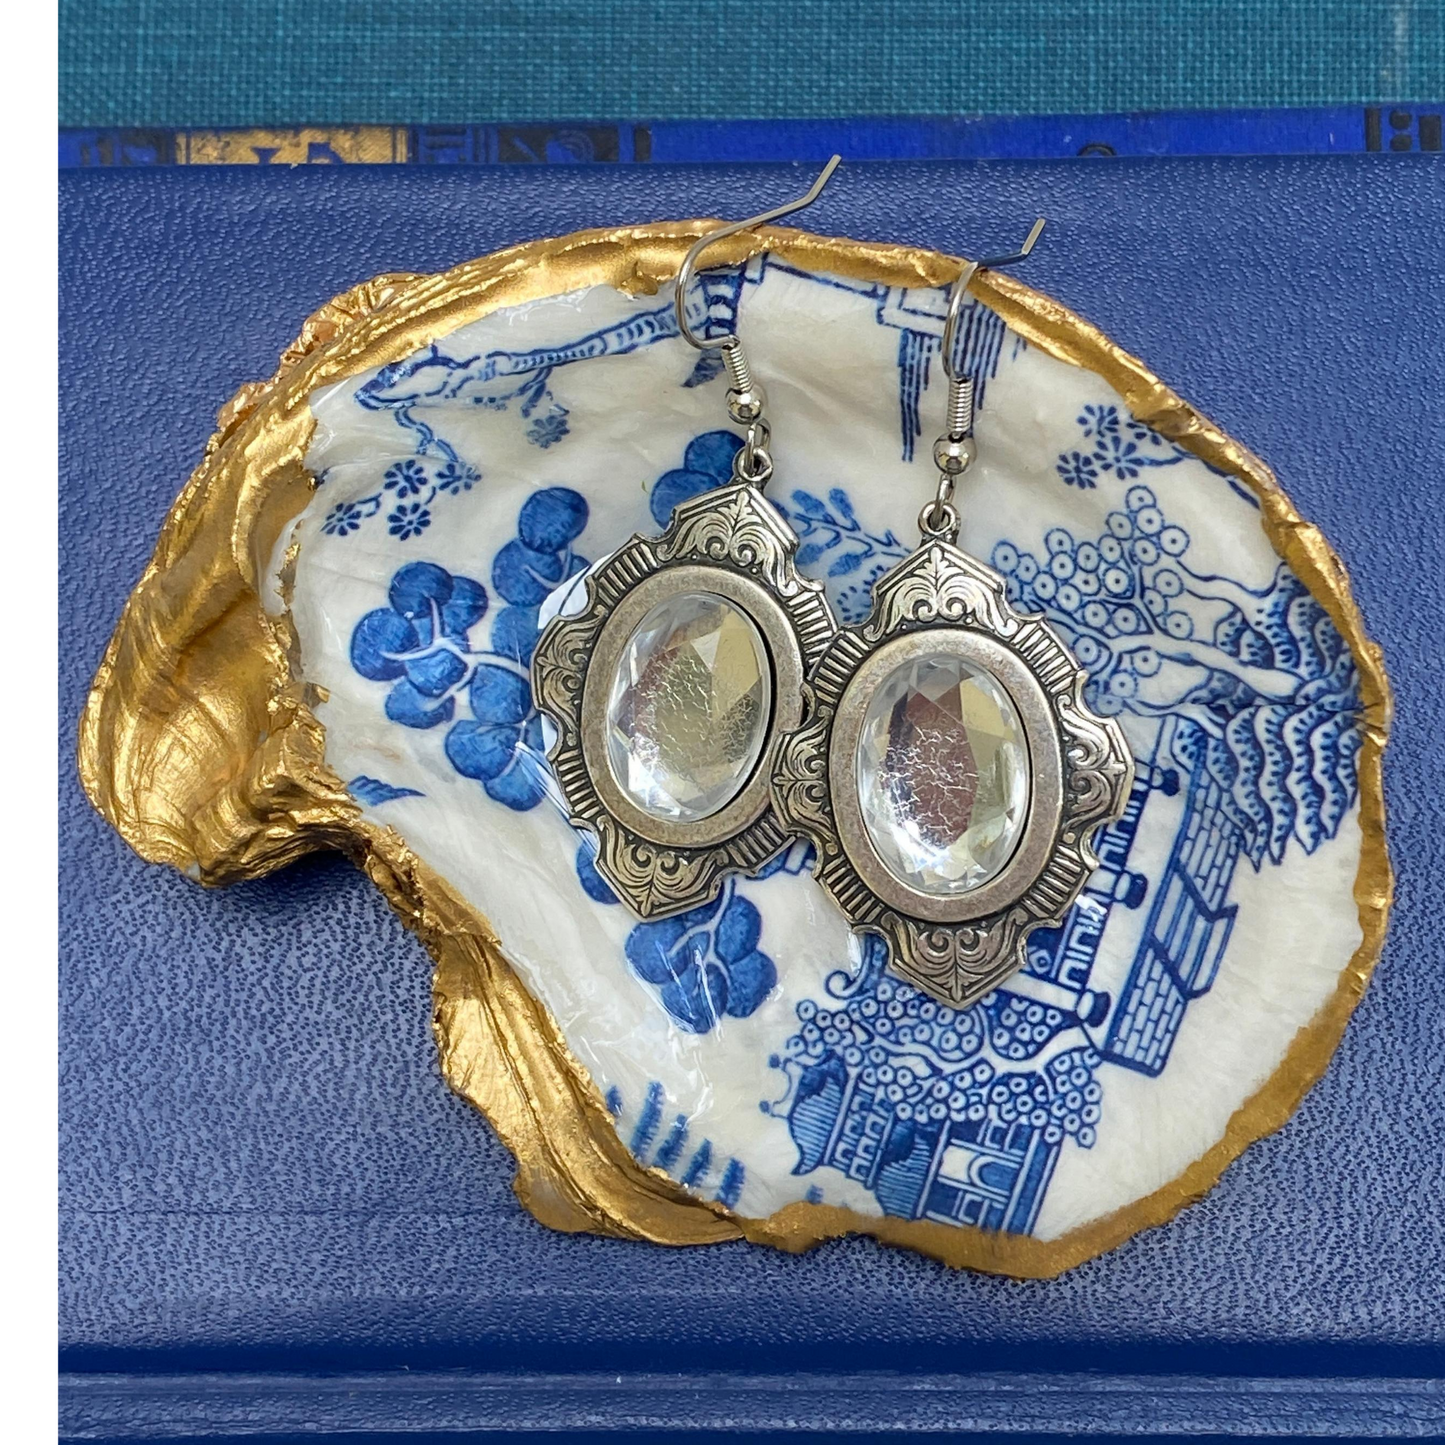 Earring, Vintage Antique Silver, Edwardian Clear Oval Cabochon, Diamond Shape Setting